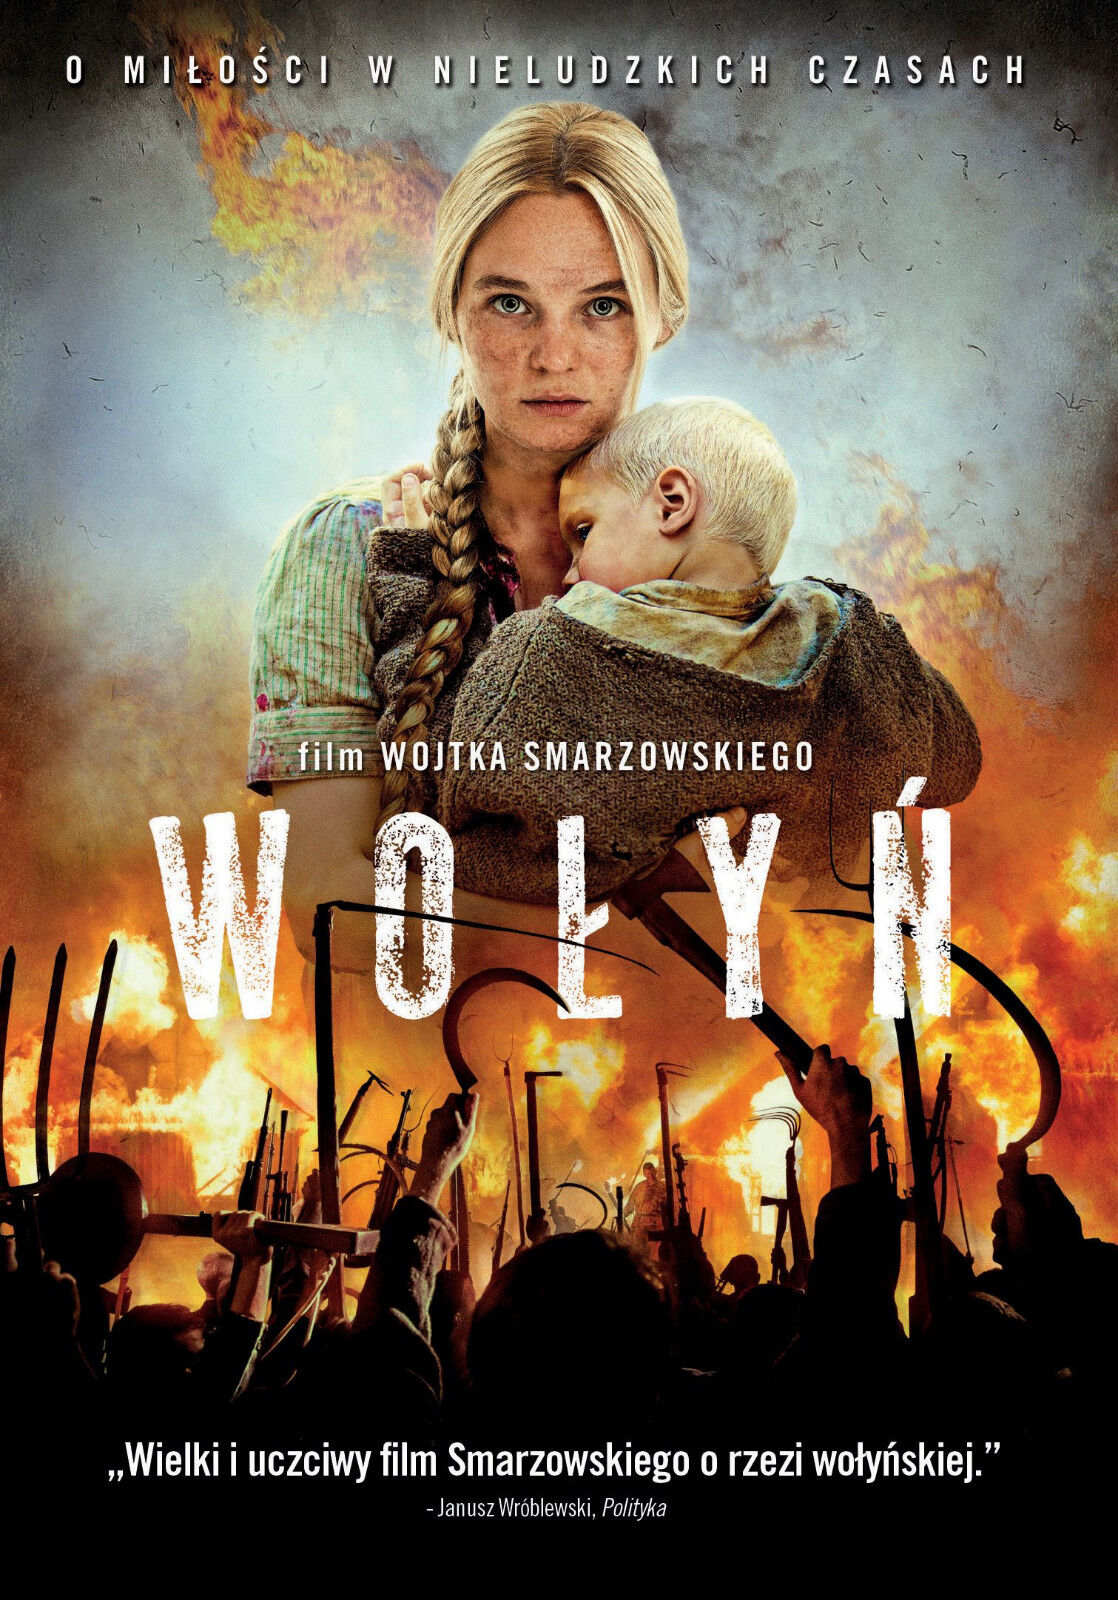 Wołyń / Volhynia  - New film on Wołyń massacres  [DVD] (English subtitles)